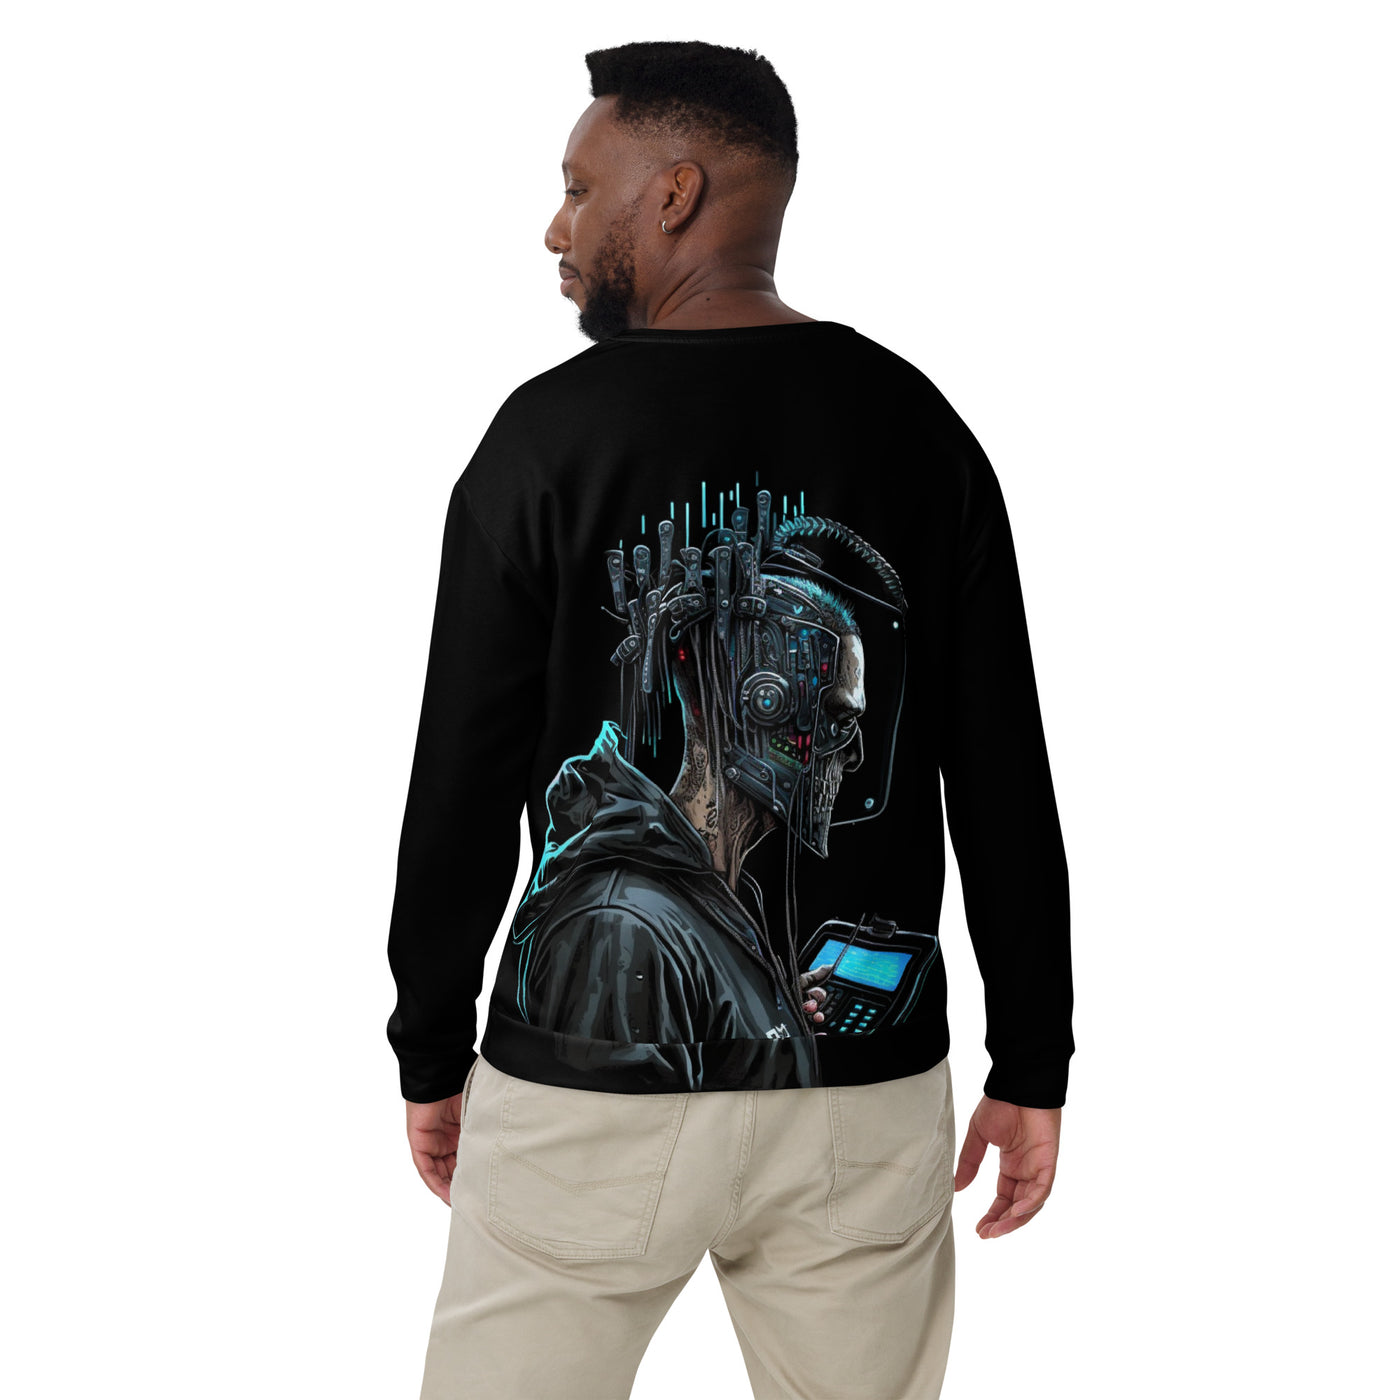 Cyberware assassin v6 - Unisex Sweatshirt ( Back Print )